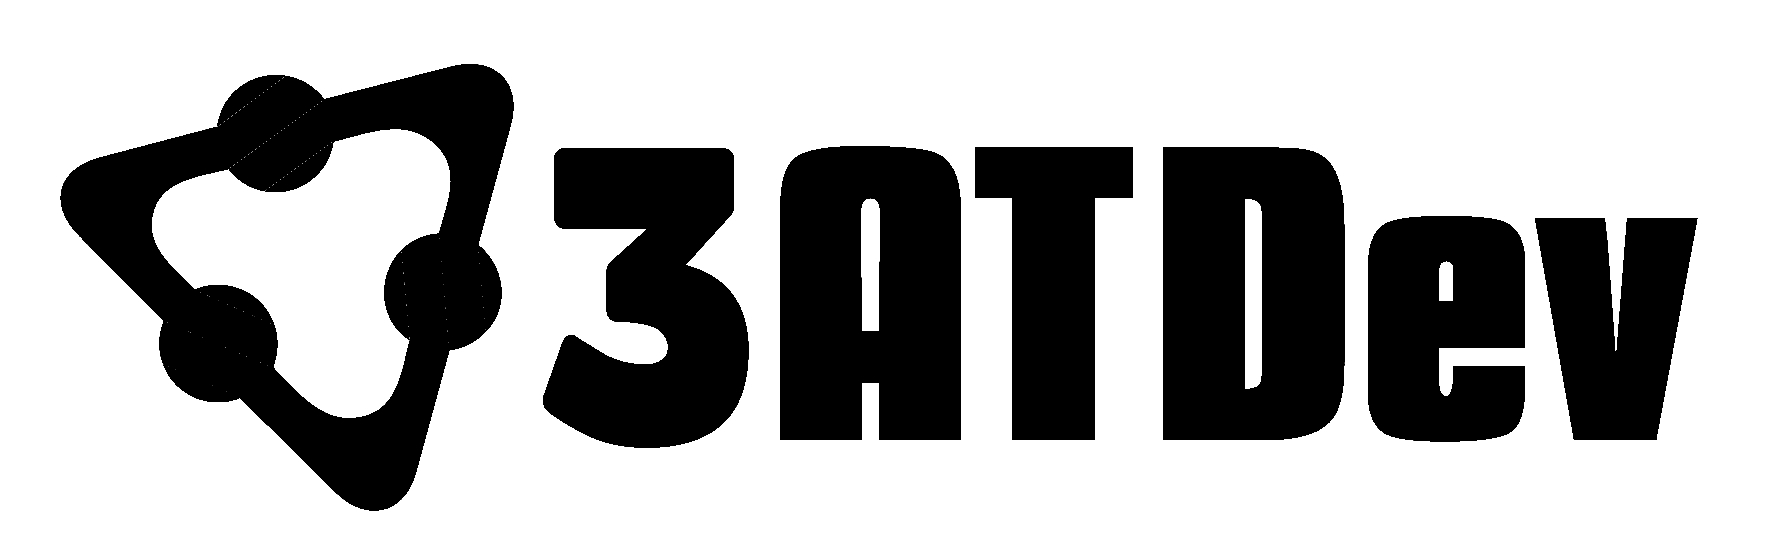 Логотип компании «3ATDev»